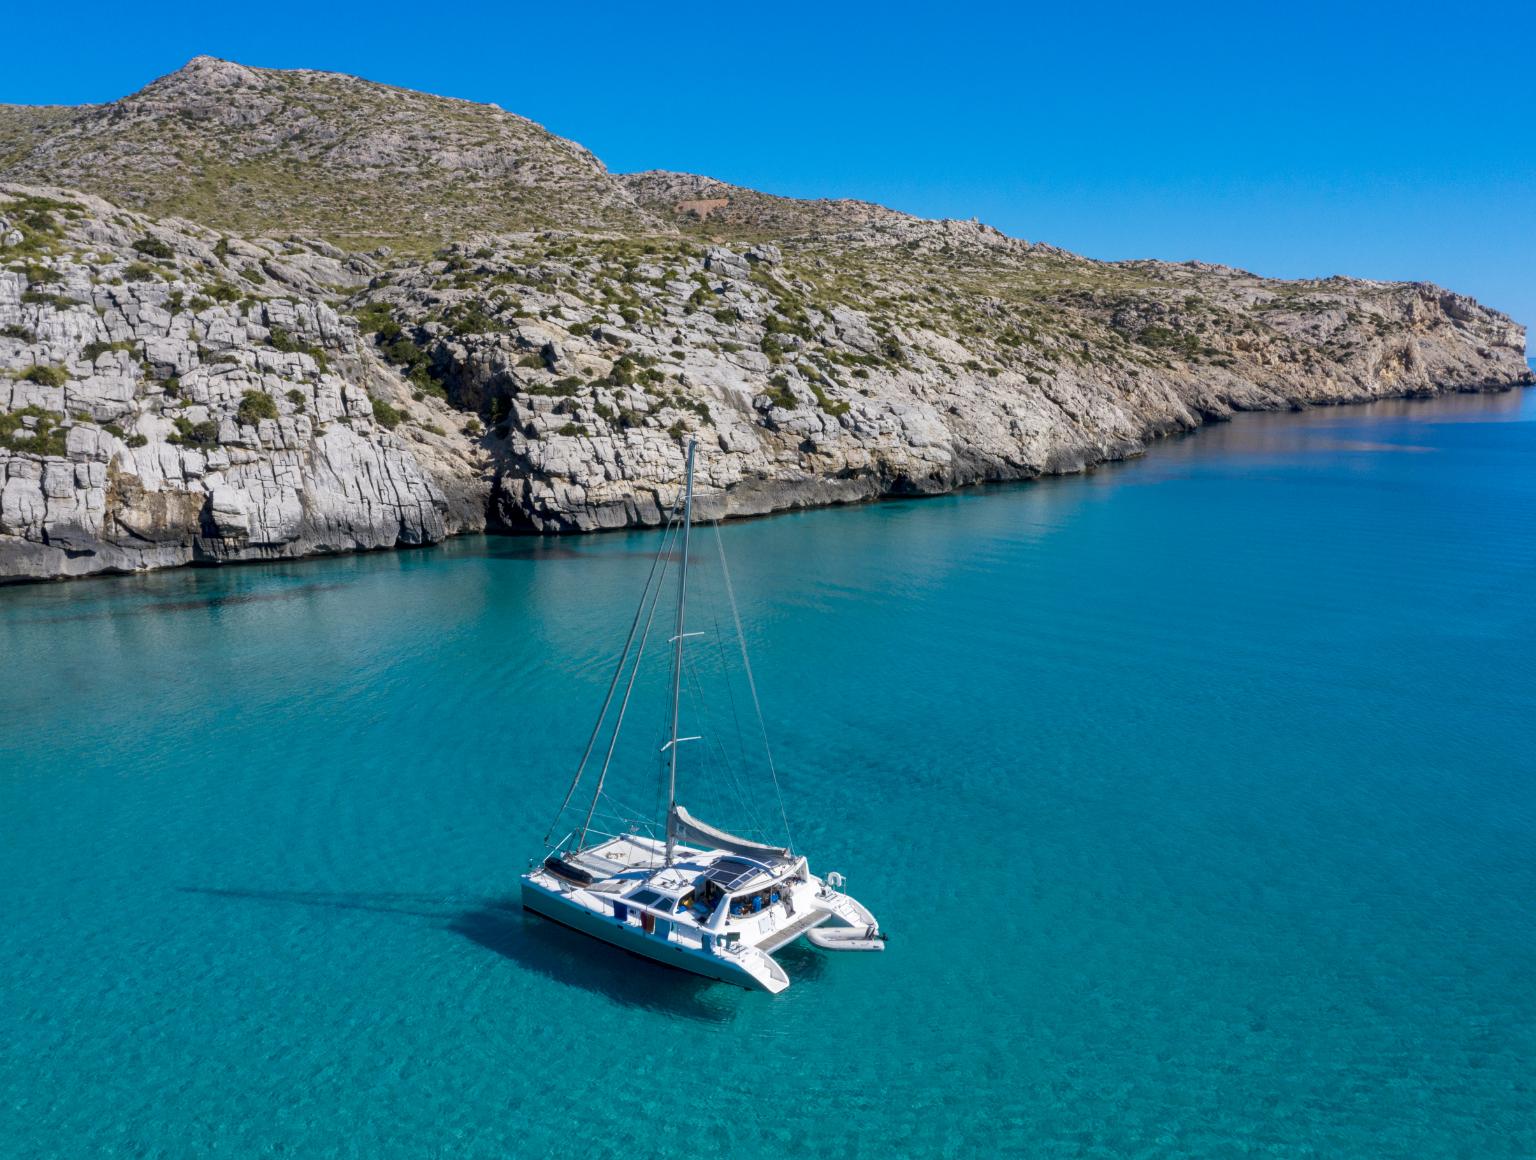 Catamaran in the crystal clear waters of the Mediterranean Sea at Cala San Vicente, Majorca.